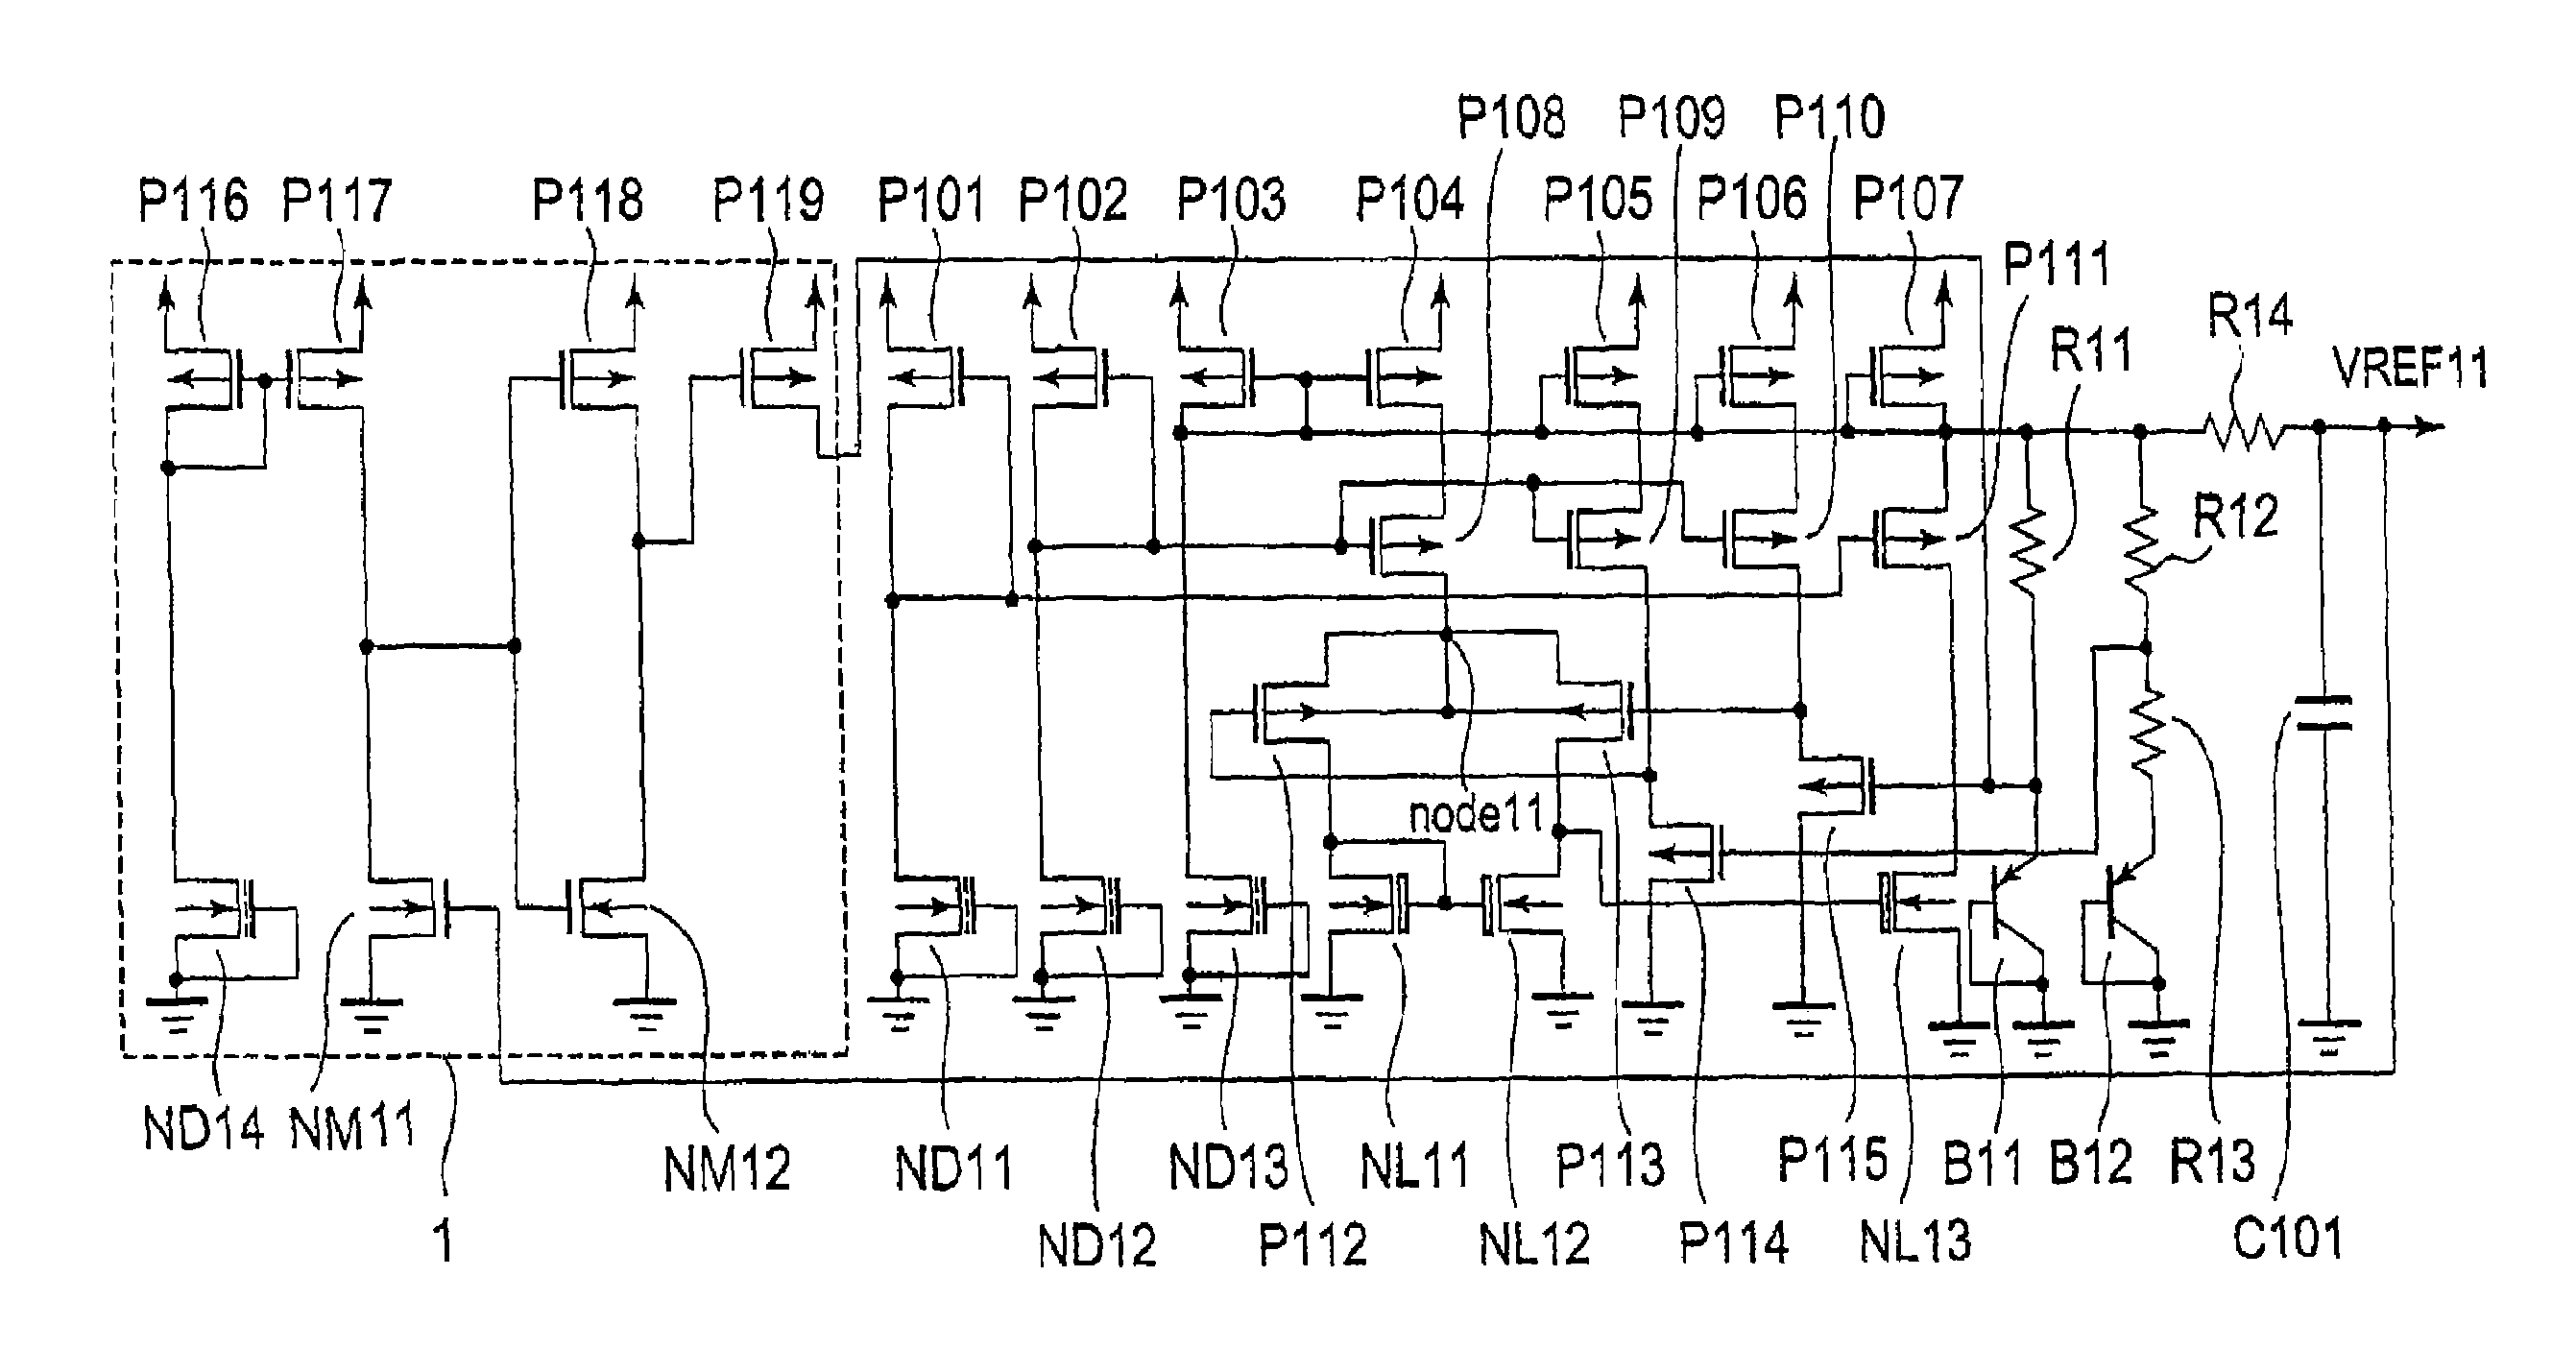 Band gap constant-voltage circuit